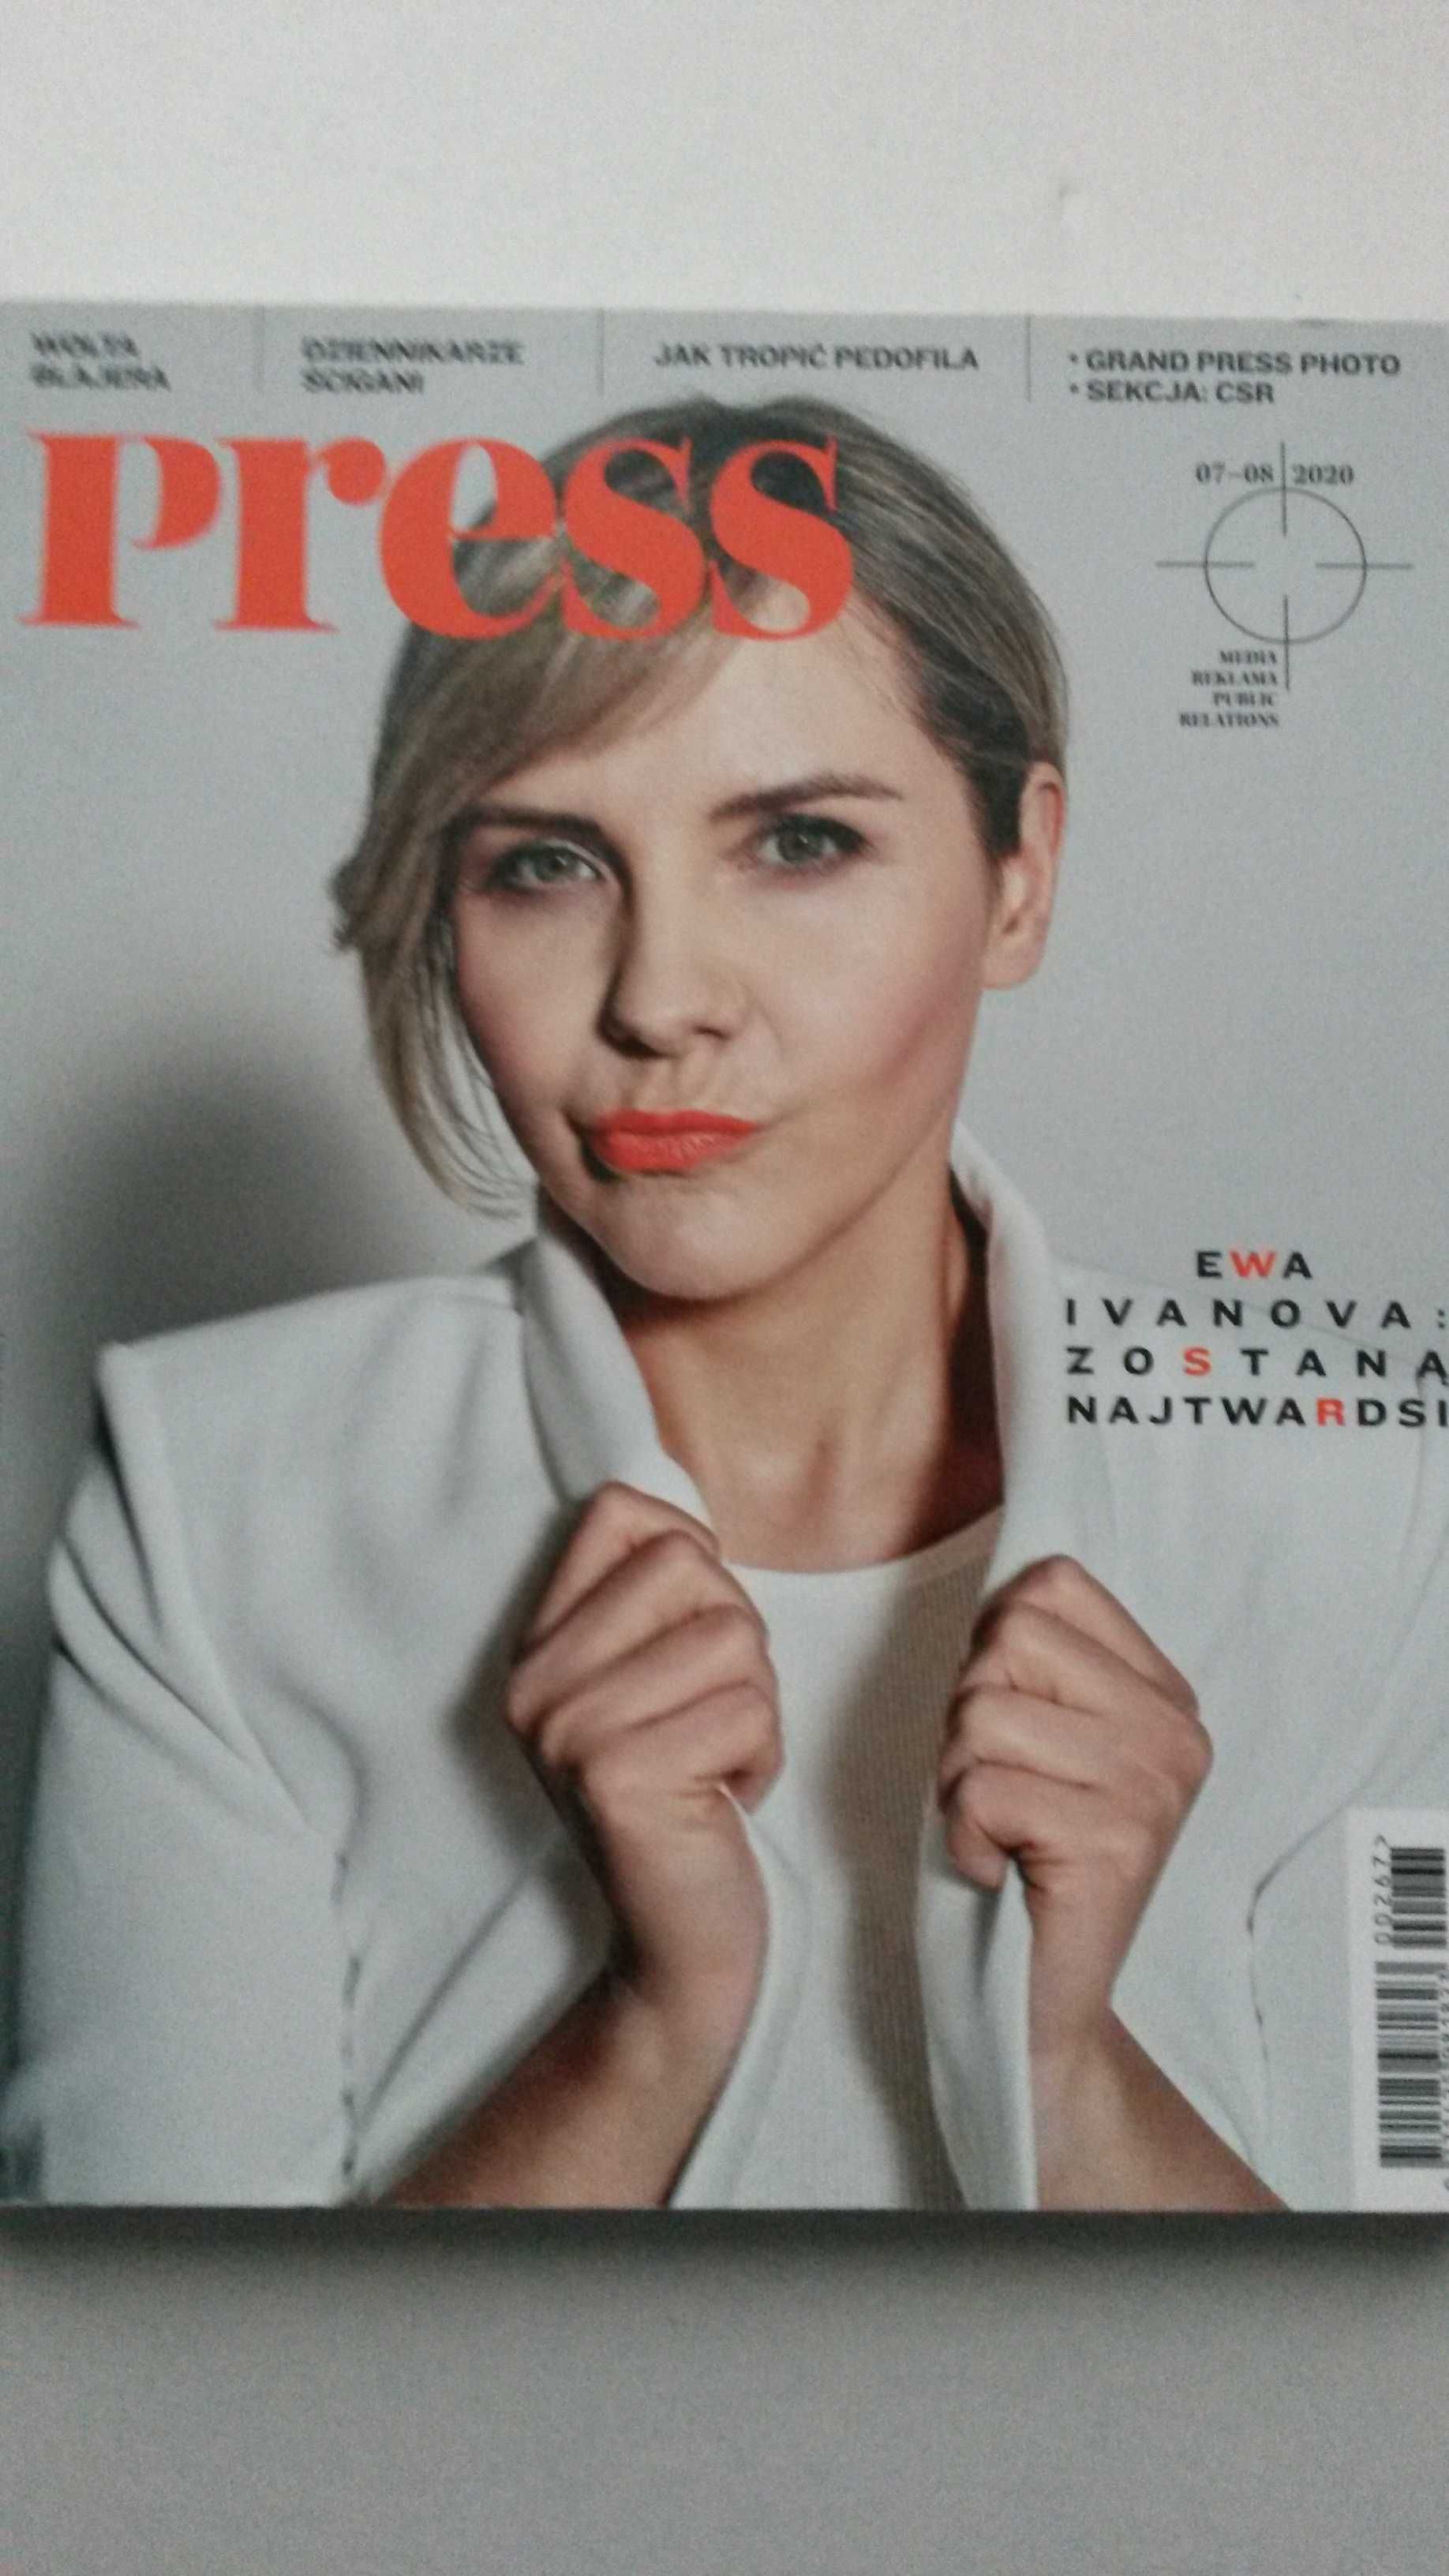 Czasopismo magazyn miesięcznik PRESS Rosiak Gebert Ivanova